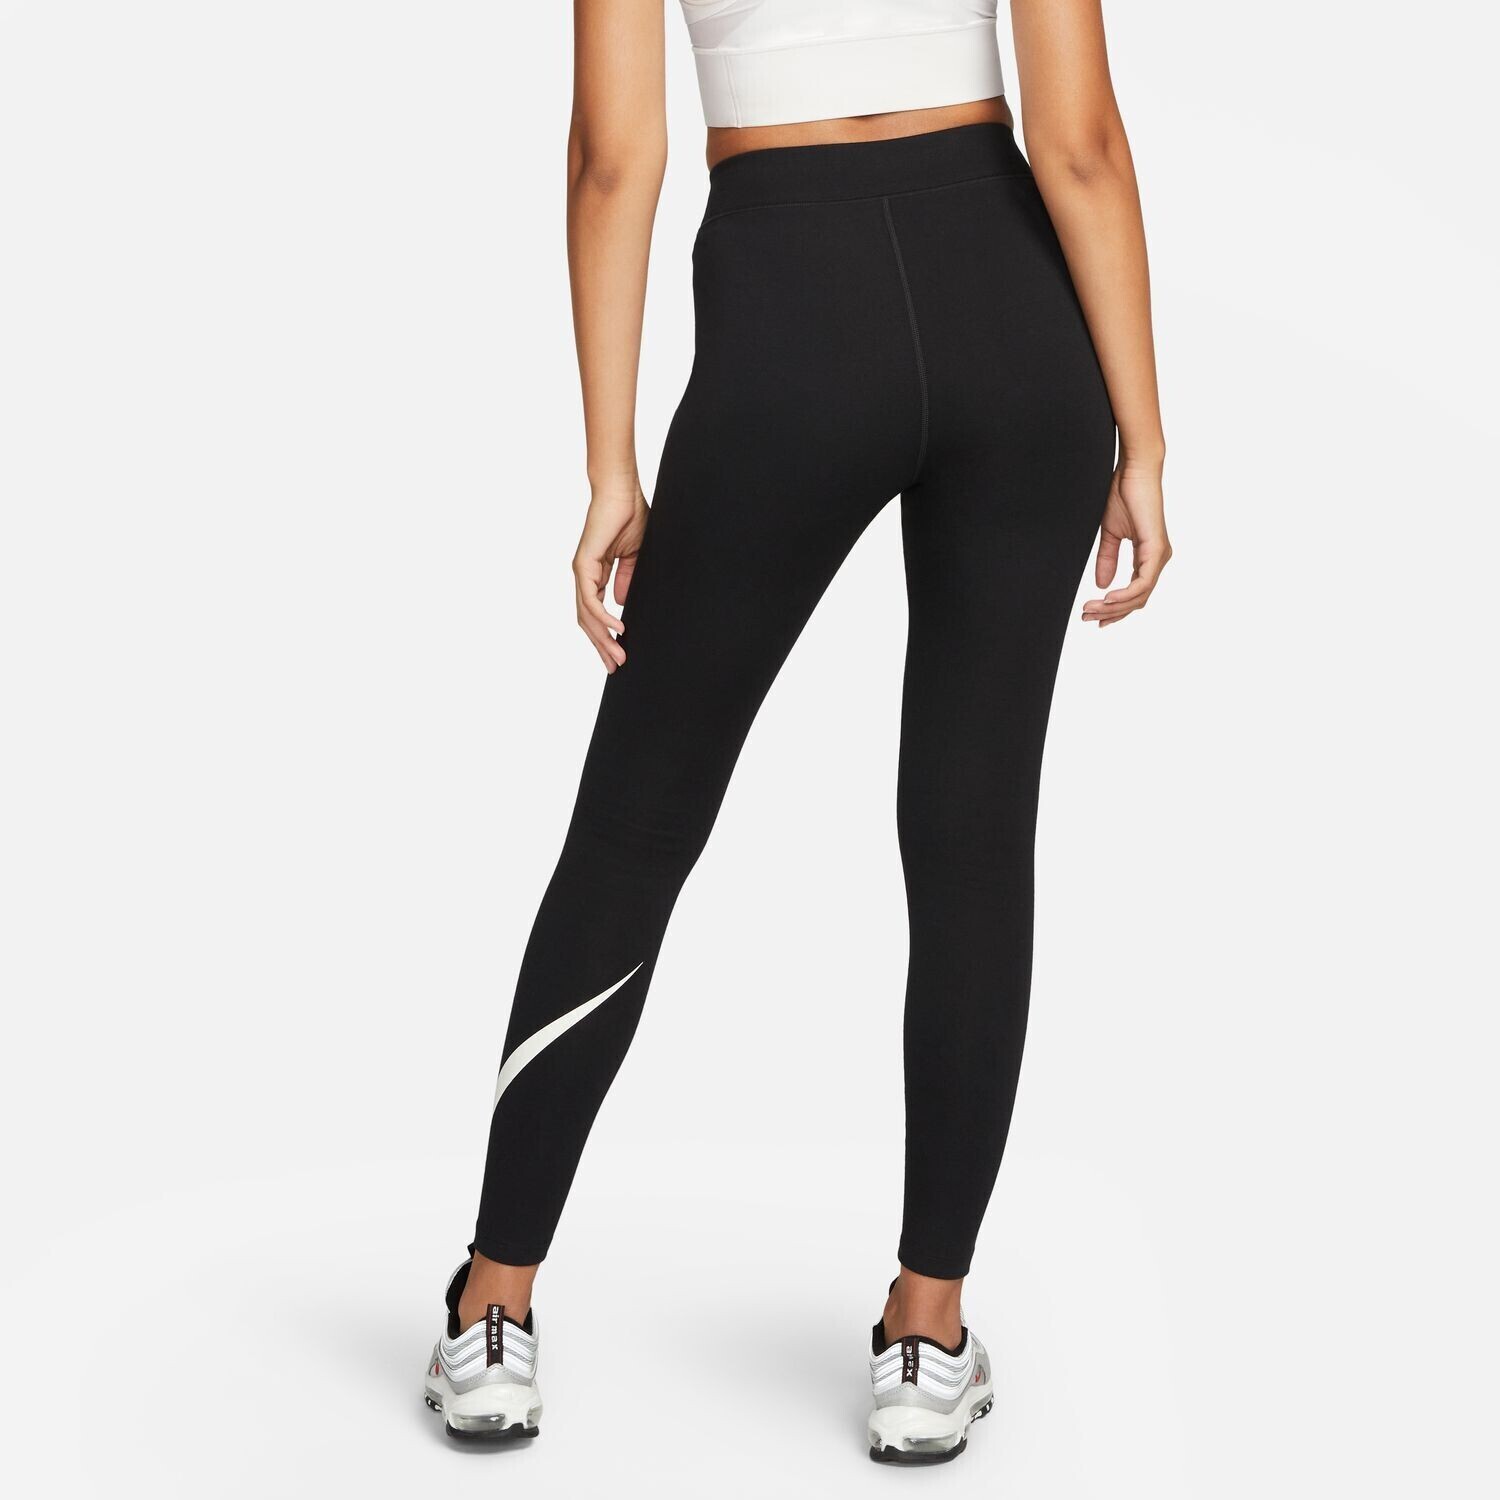 Leggings a vita alta Nike Sportswear Favorites (taglia grande